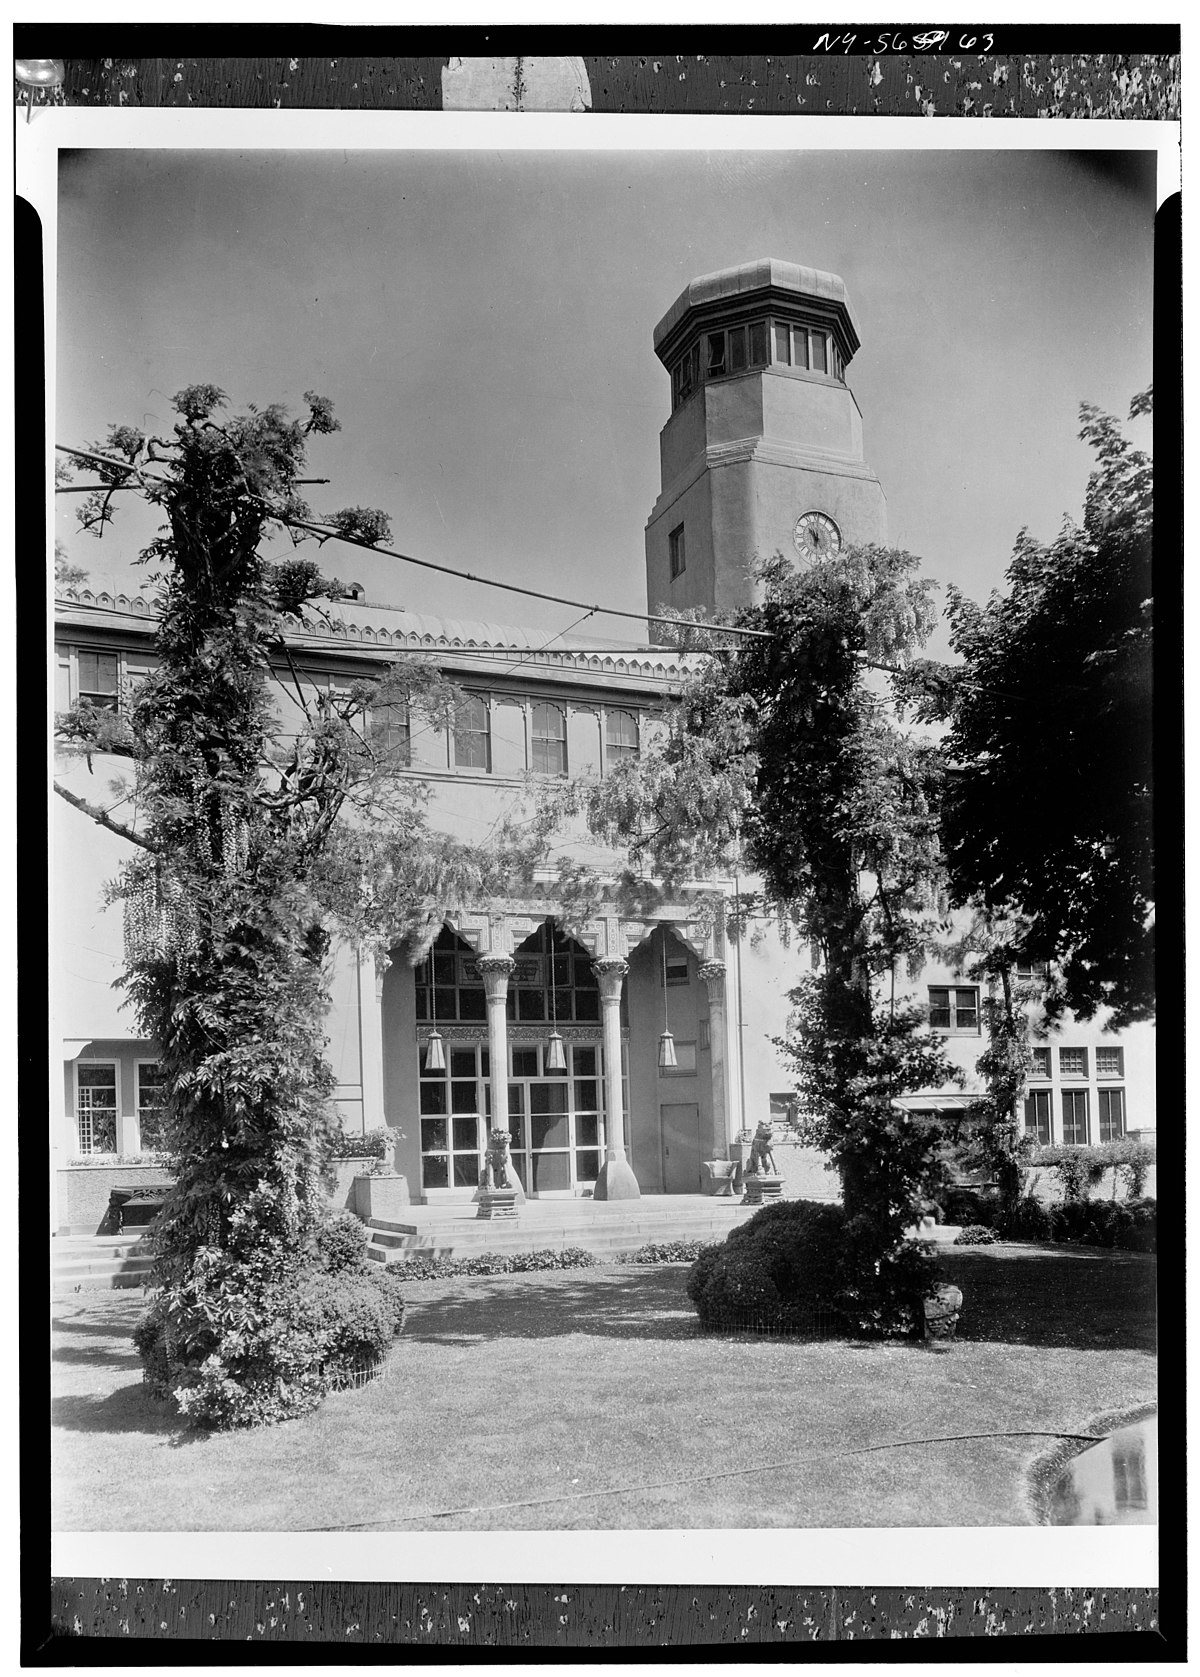 Laurelton Hall, Louis Comfort Tiffany's Long Island estate